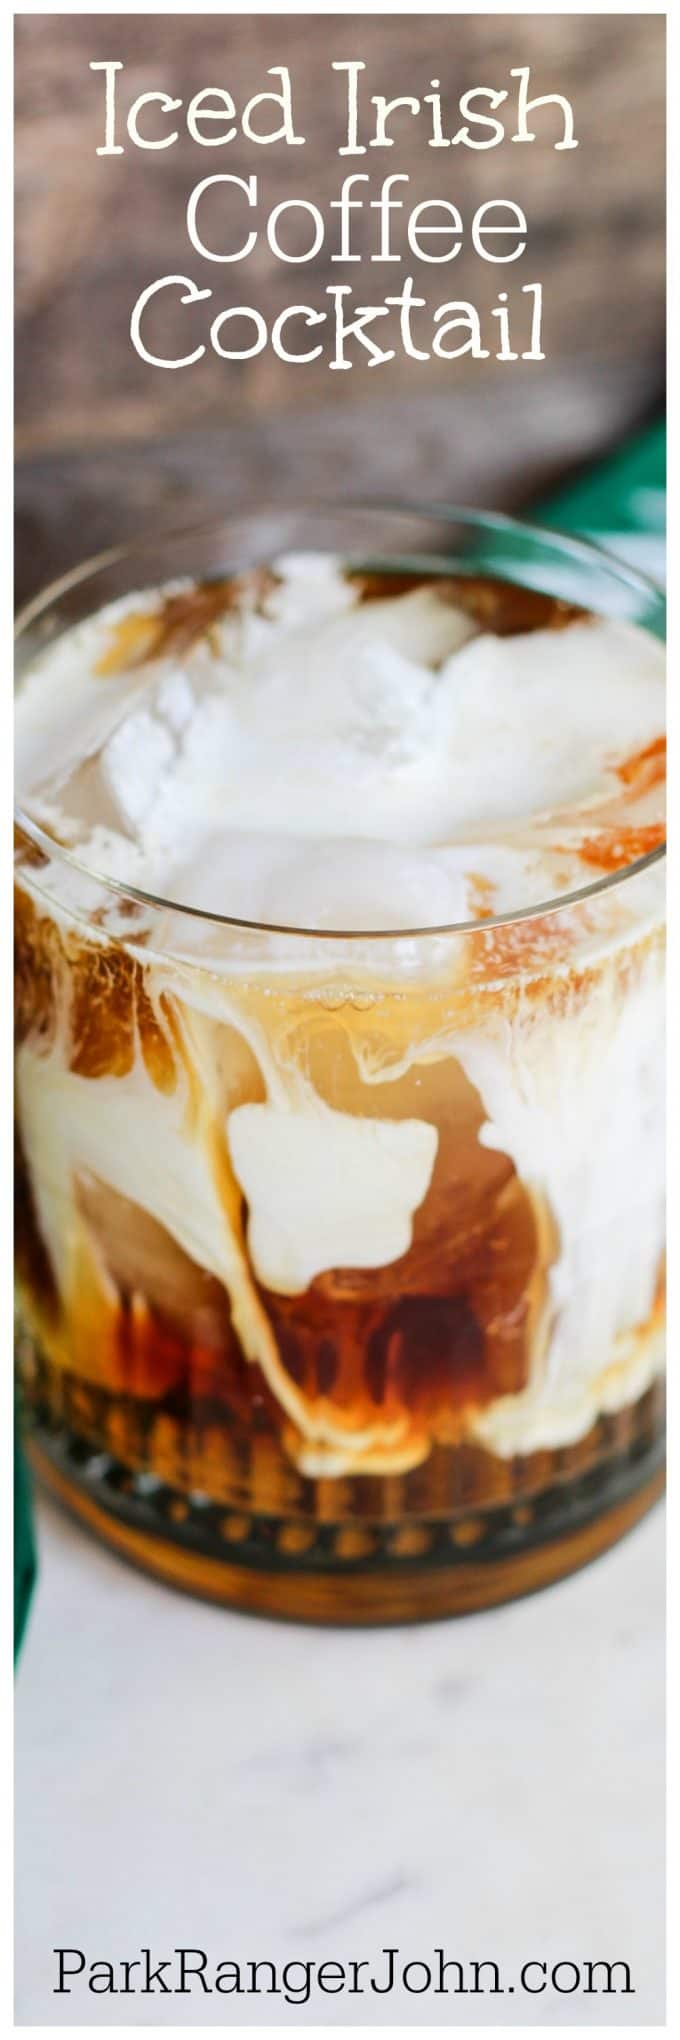 The perfect Iced Irish Coffee Cocktail Recipe | Park Ranger John